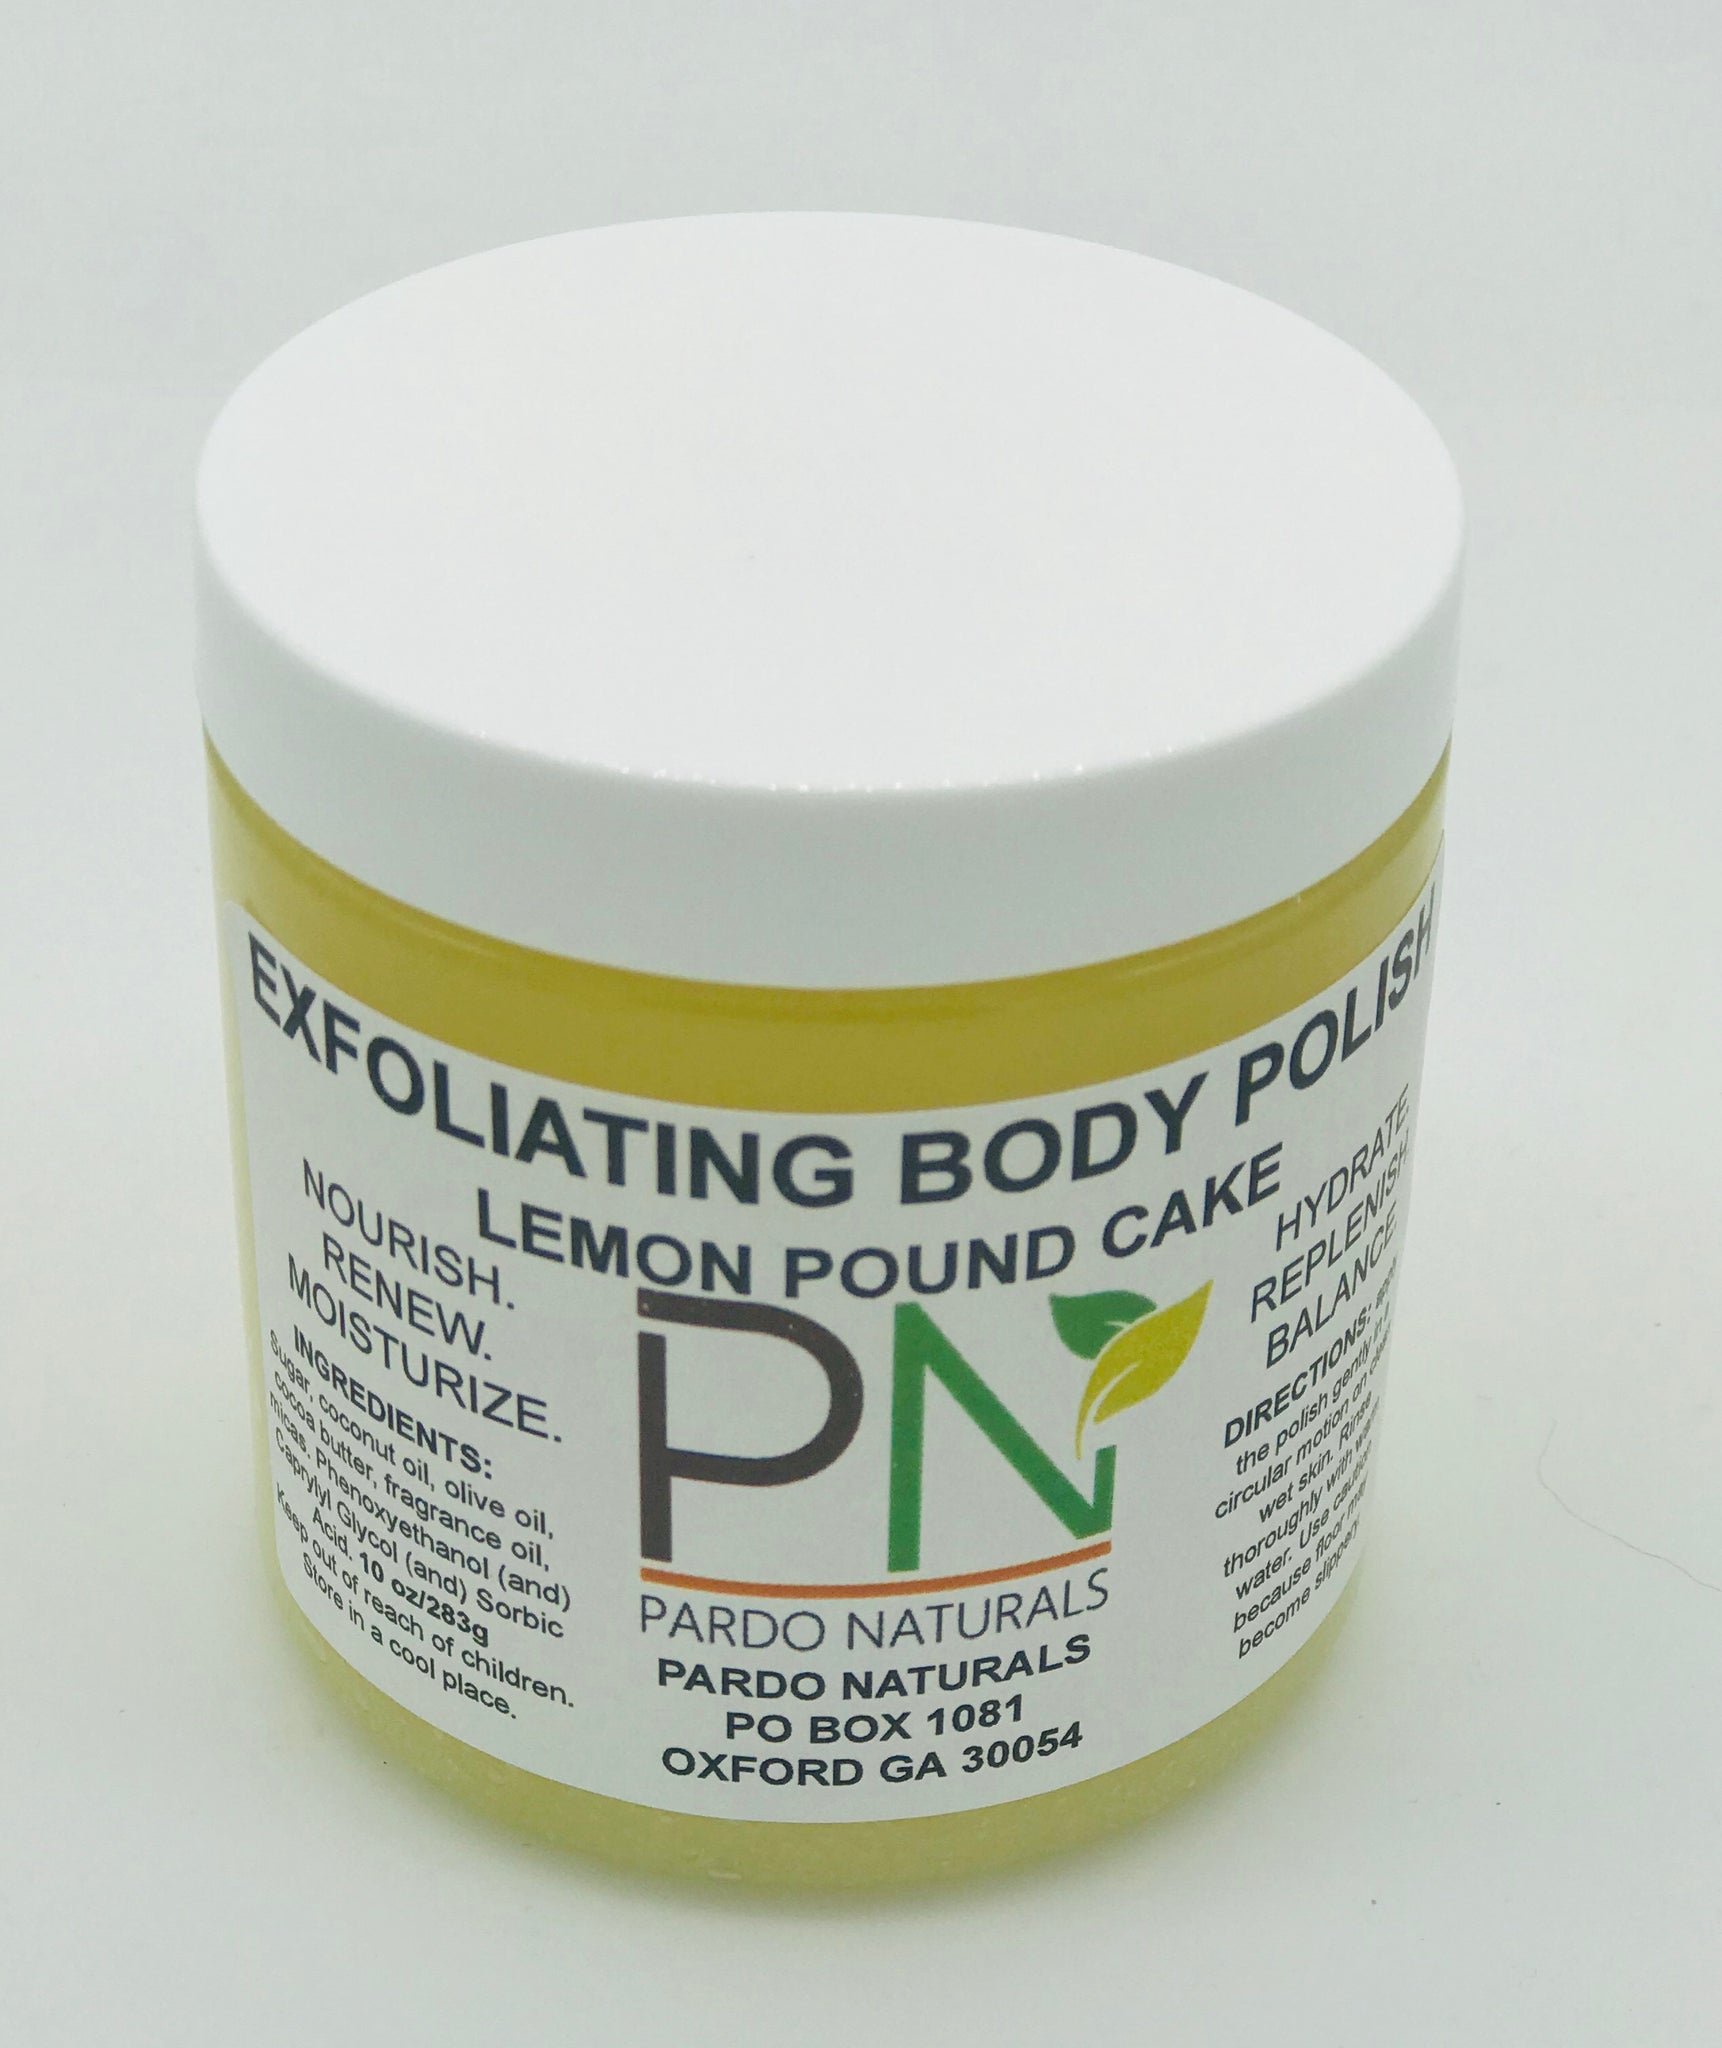 Body Exfoliating Polishes – PARDO NATURALS